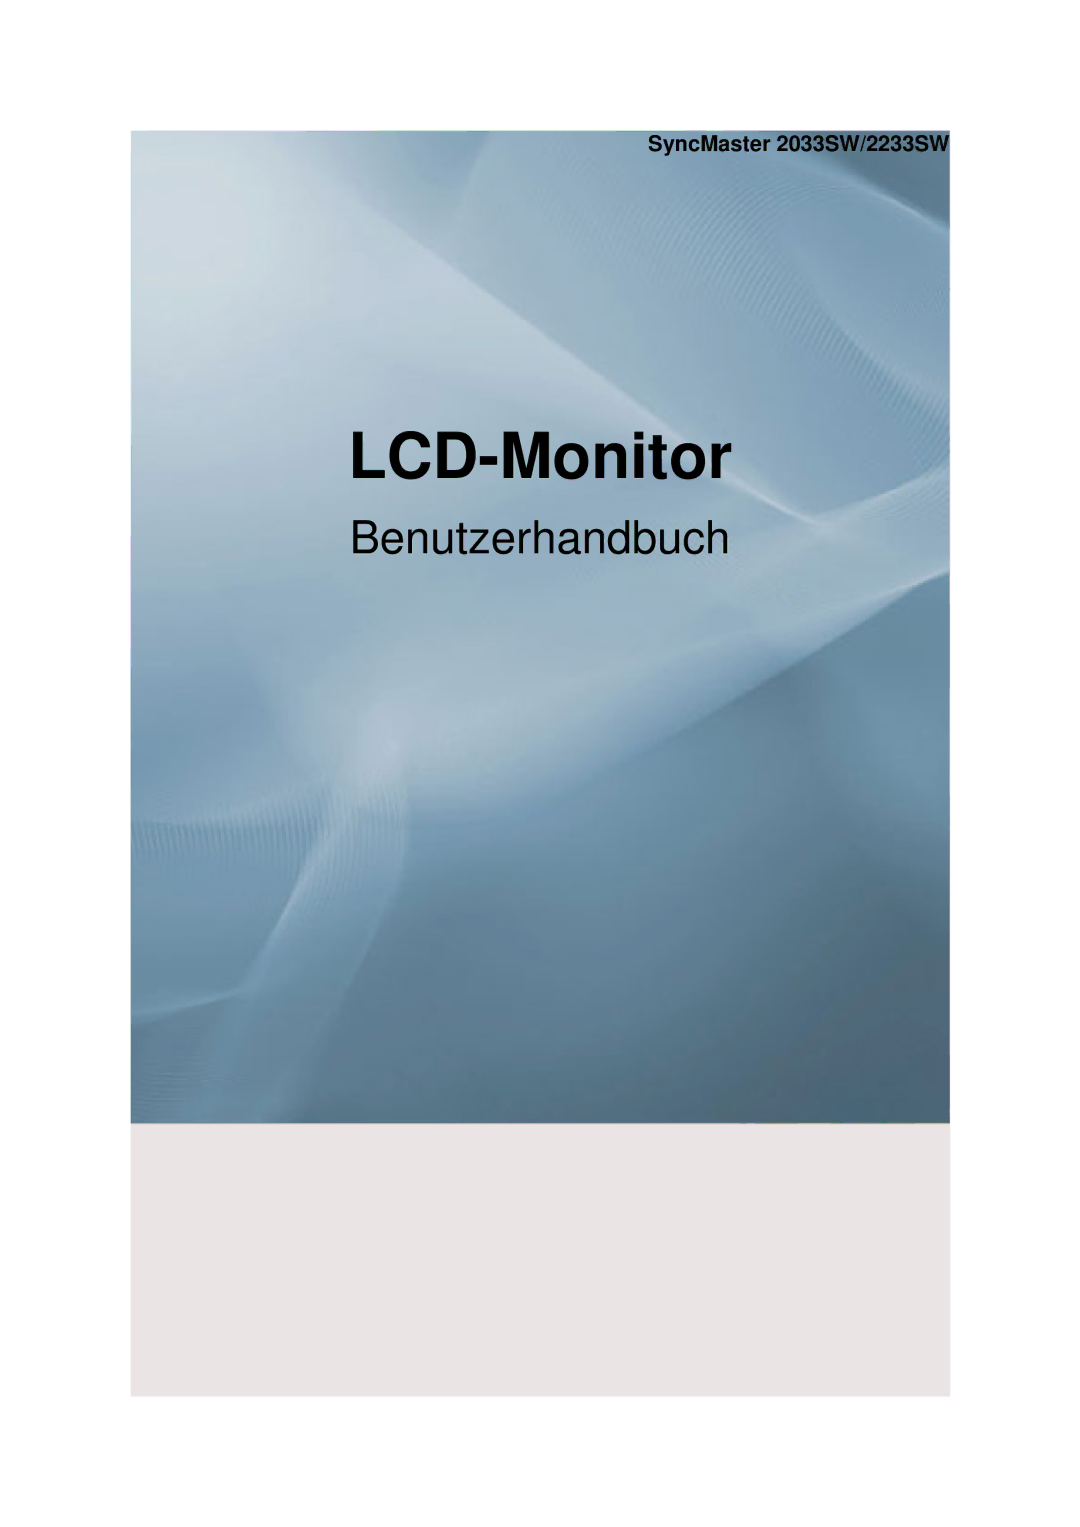 Samsung LS20CMZKFV/EN, LS20CMZKFVA/EN manual LCD-Monitor, SyncMaster 2033SW/2233SW 